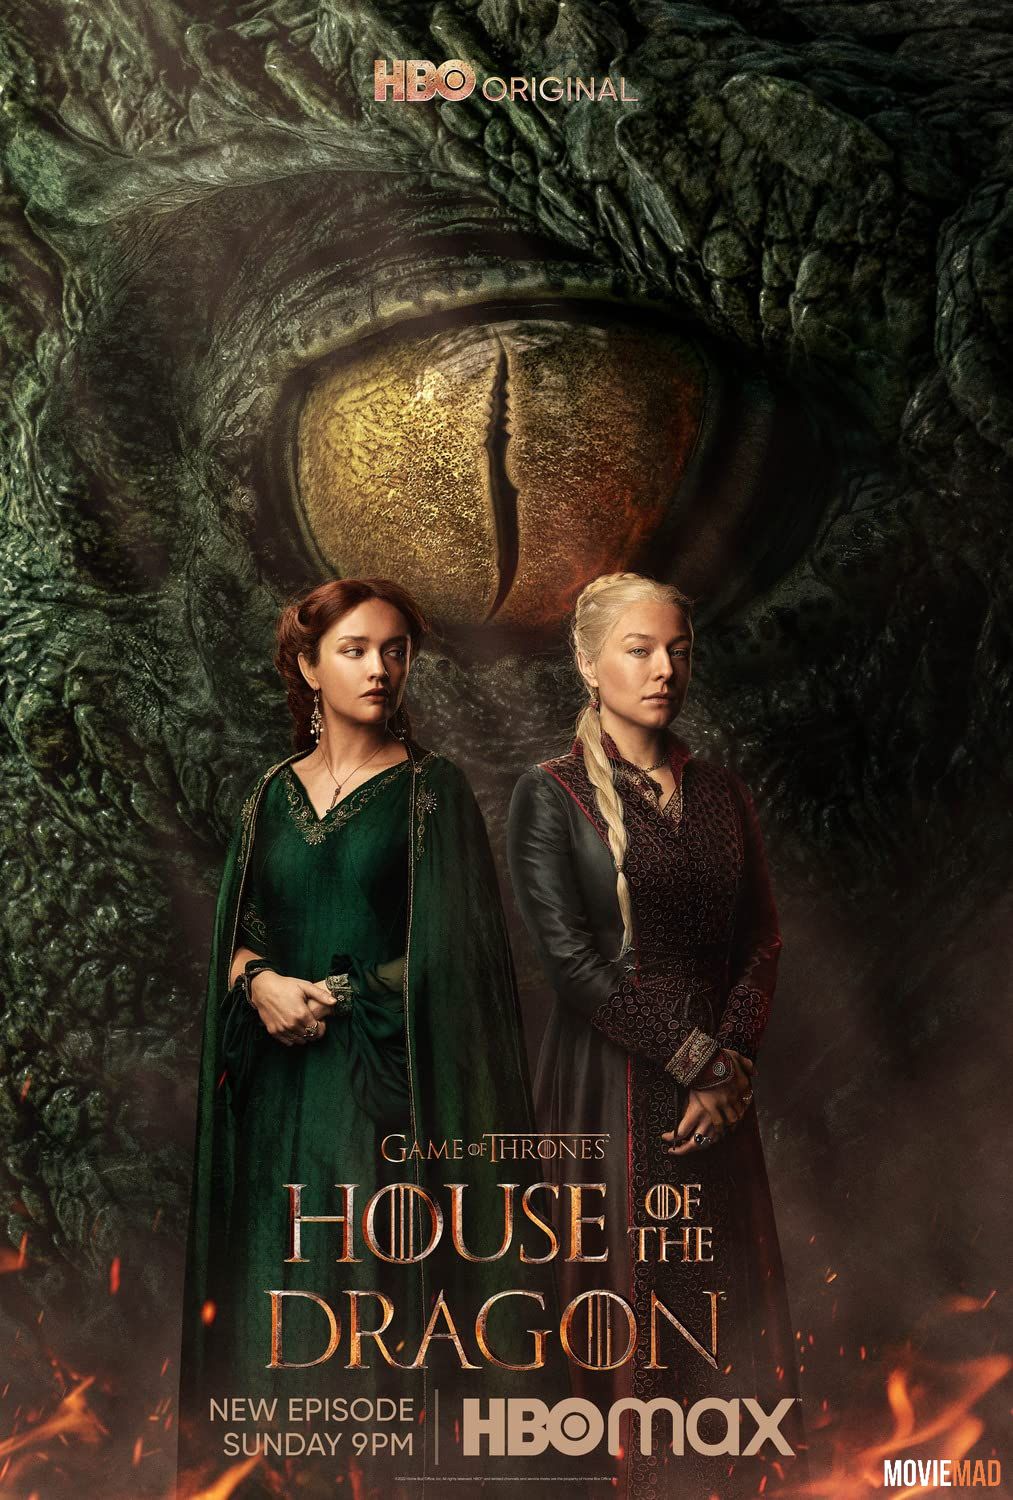 House Of The Dragon S01E09 (2022) English HBOMAX HDRip 720p 480p